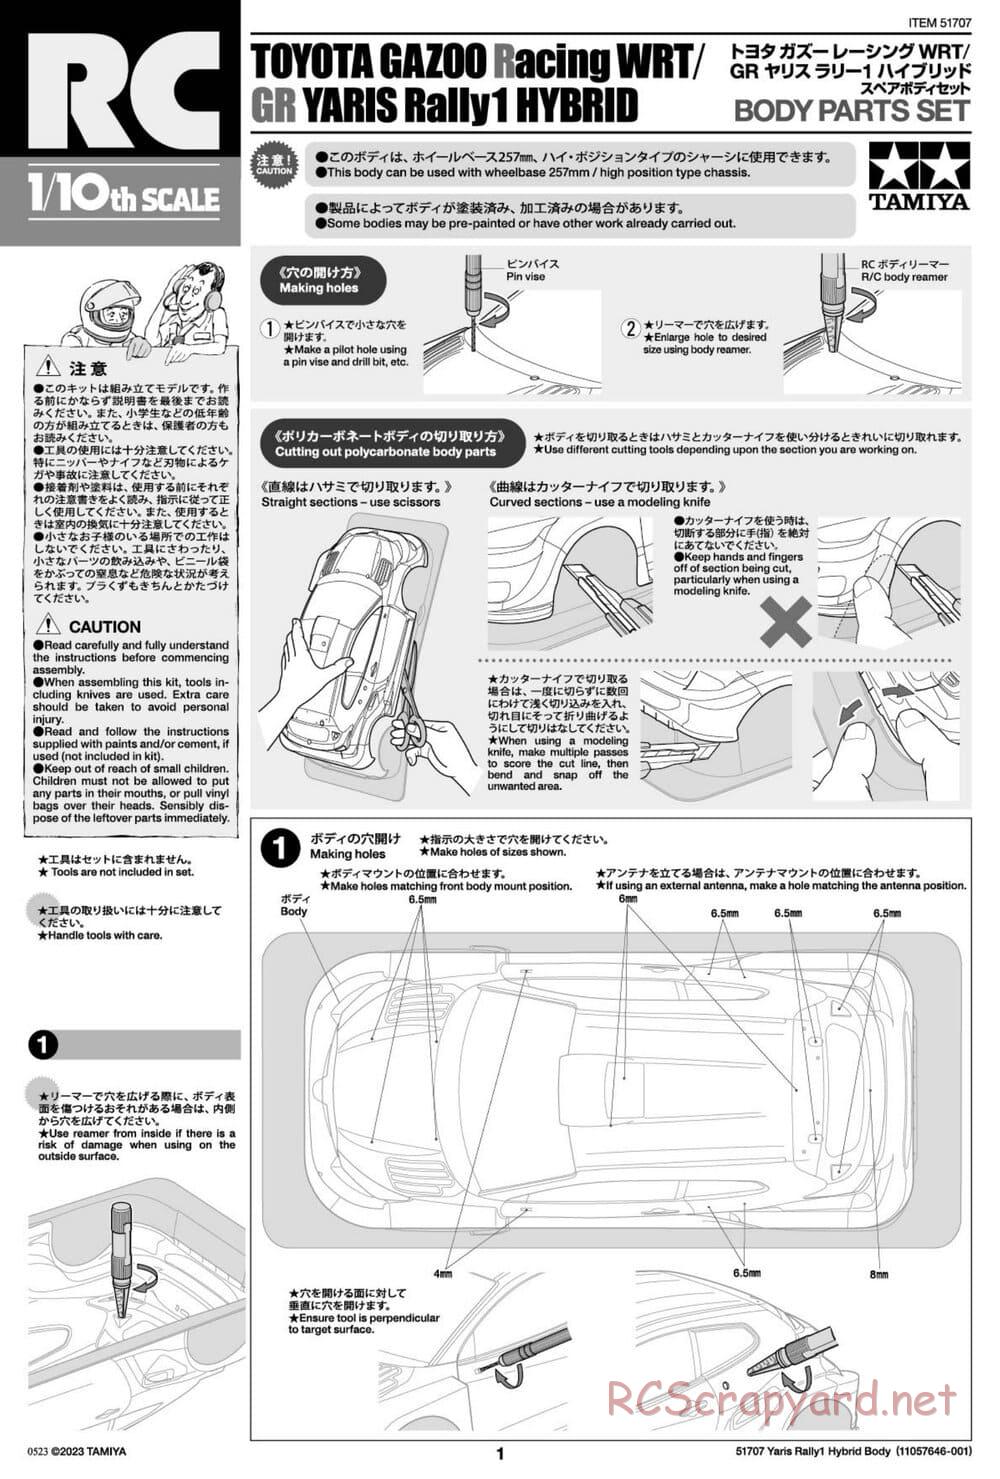 Tamiya - Toyota Gazoo Racing WRT/GR Yaris Rally1 Hybrid - TT-02 Chassis - Body Manual - Page 1